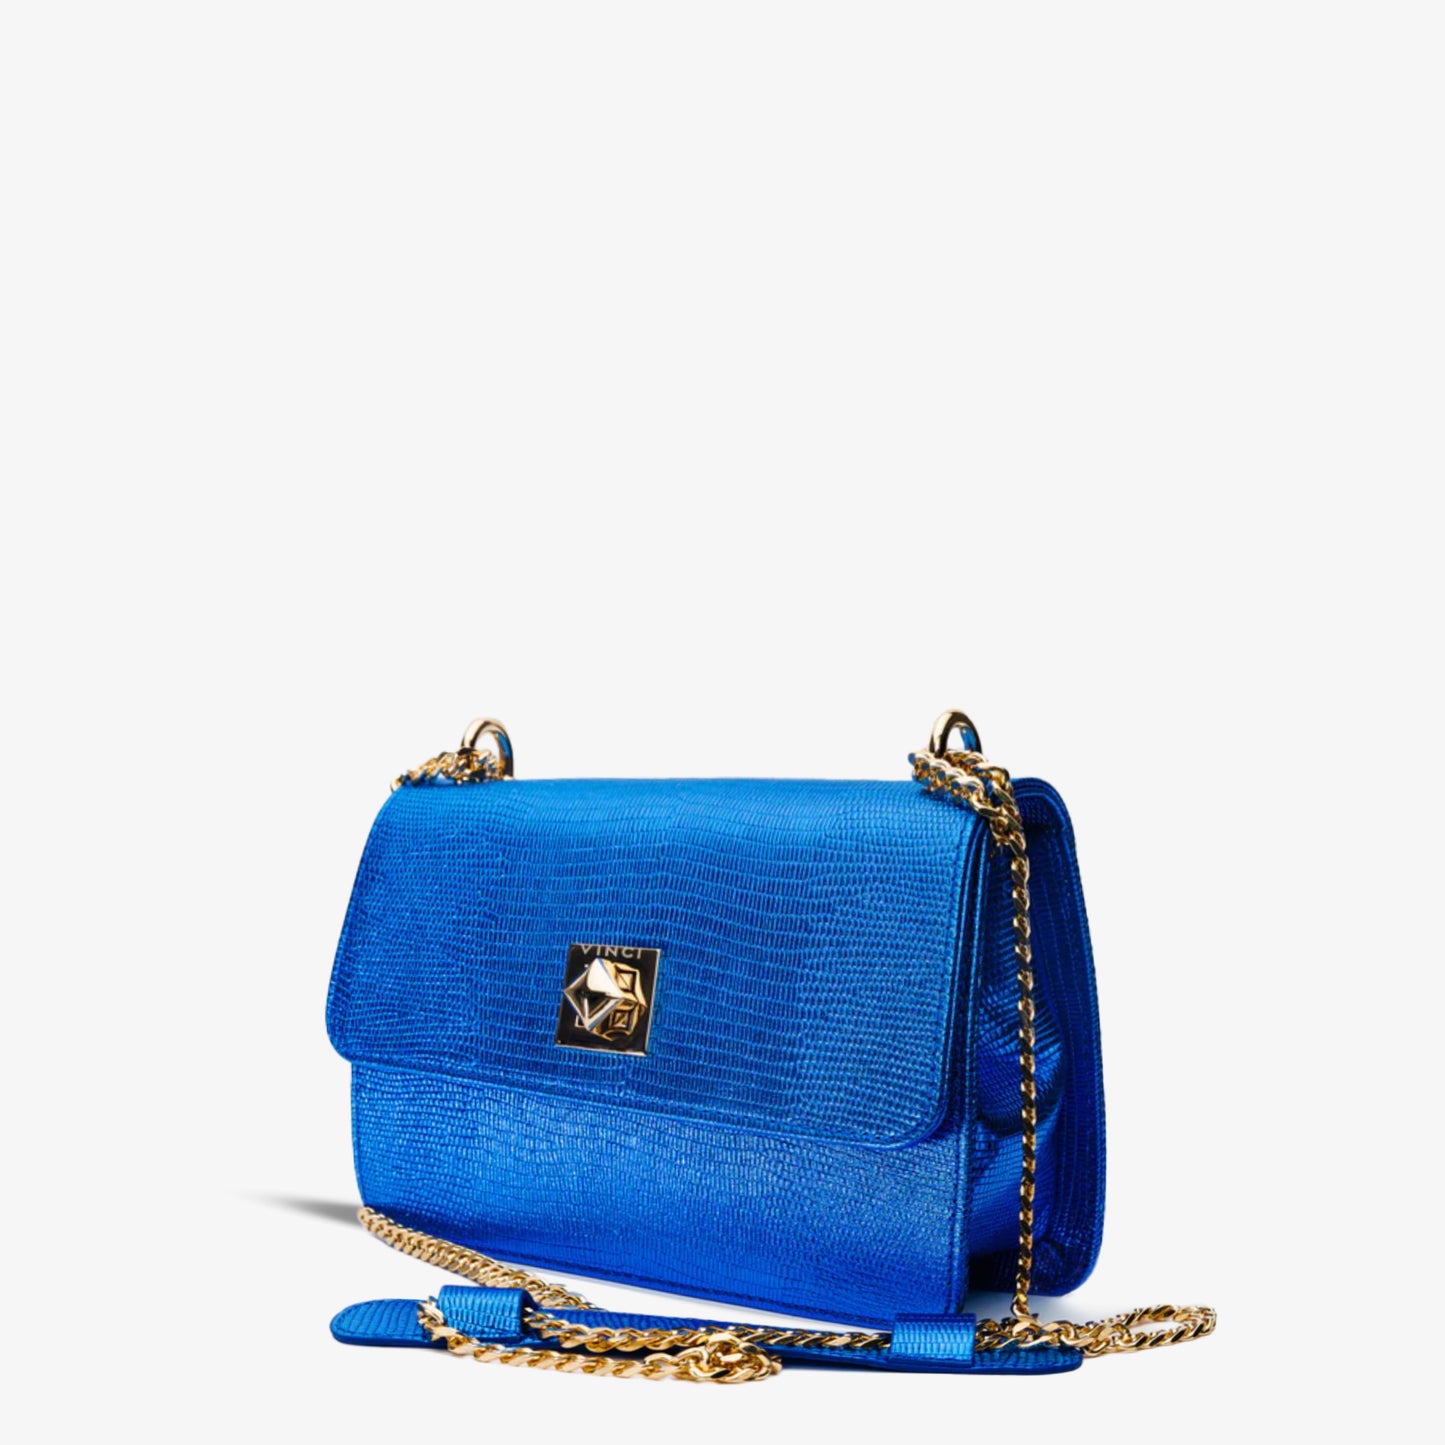 The Maple Sax Blue Leather Handbag